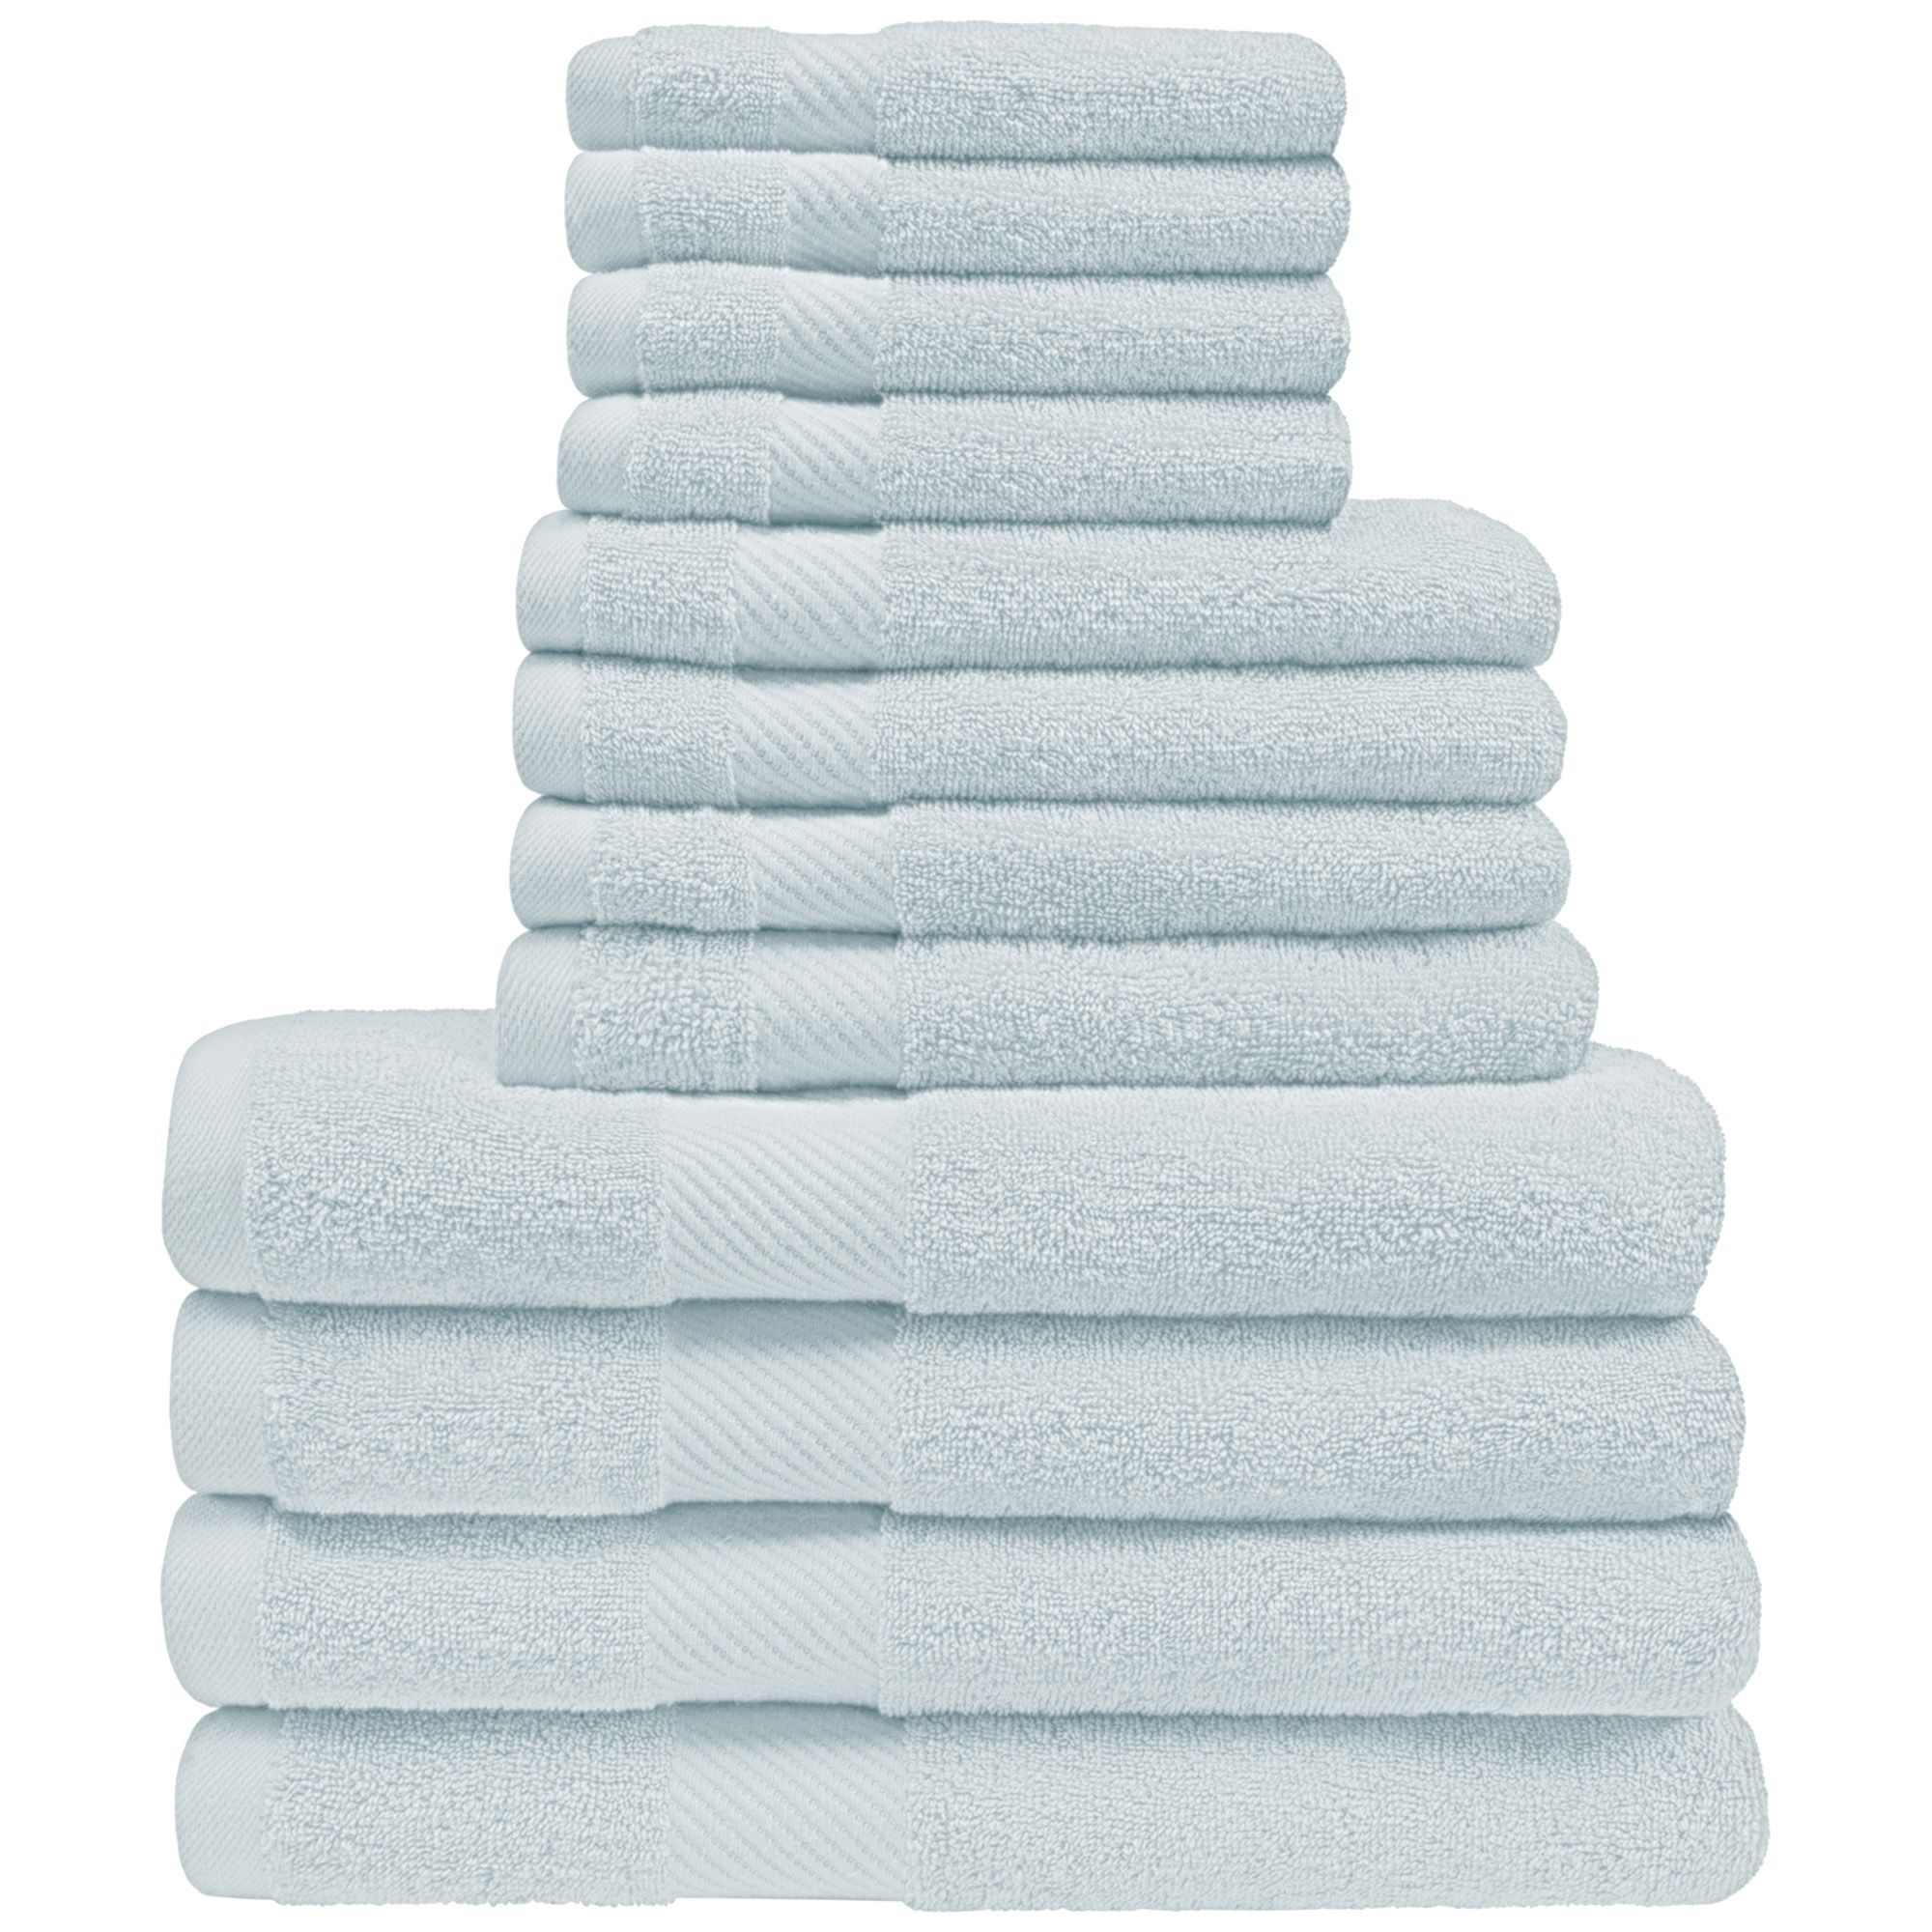 SUPERIOR 4-piece Egyptian Cotton Bath Towel Set